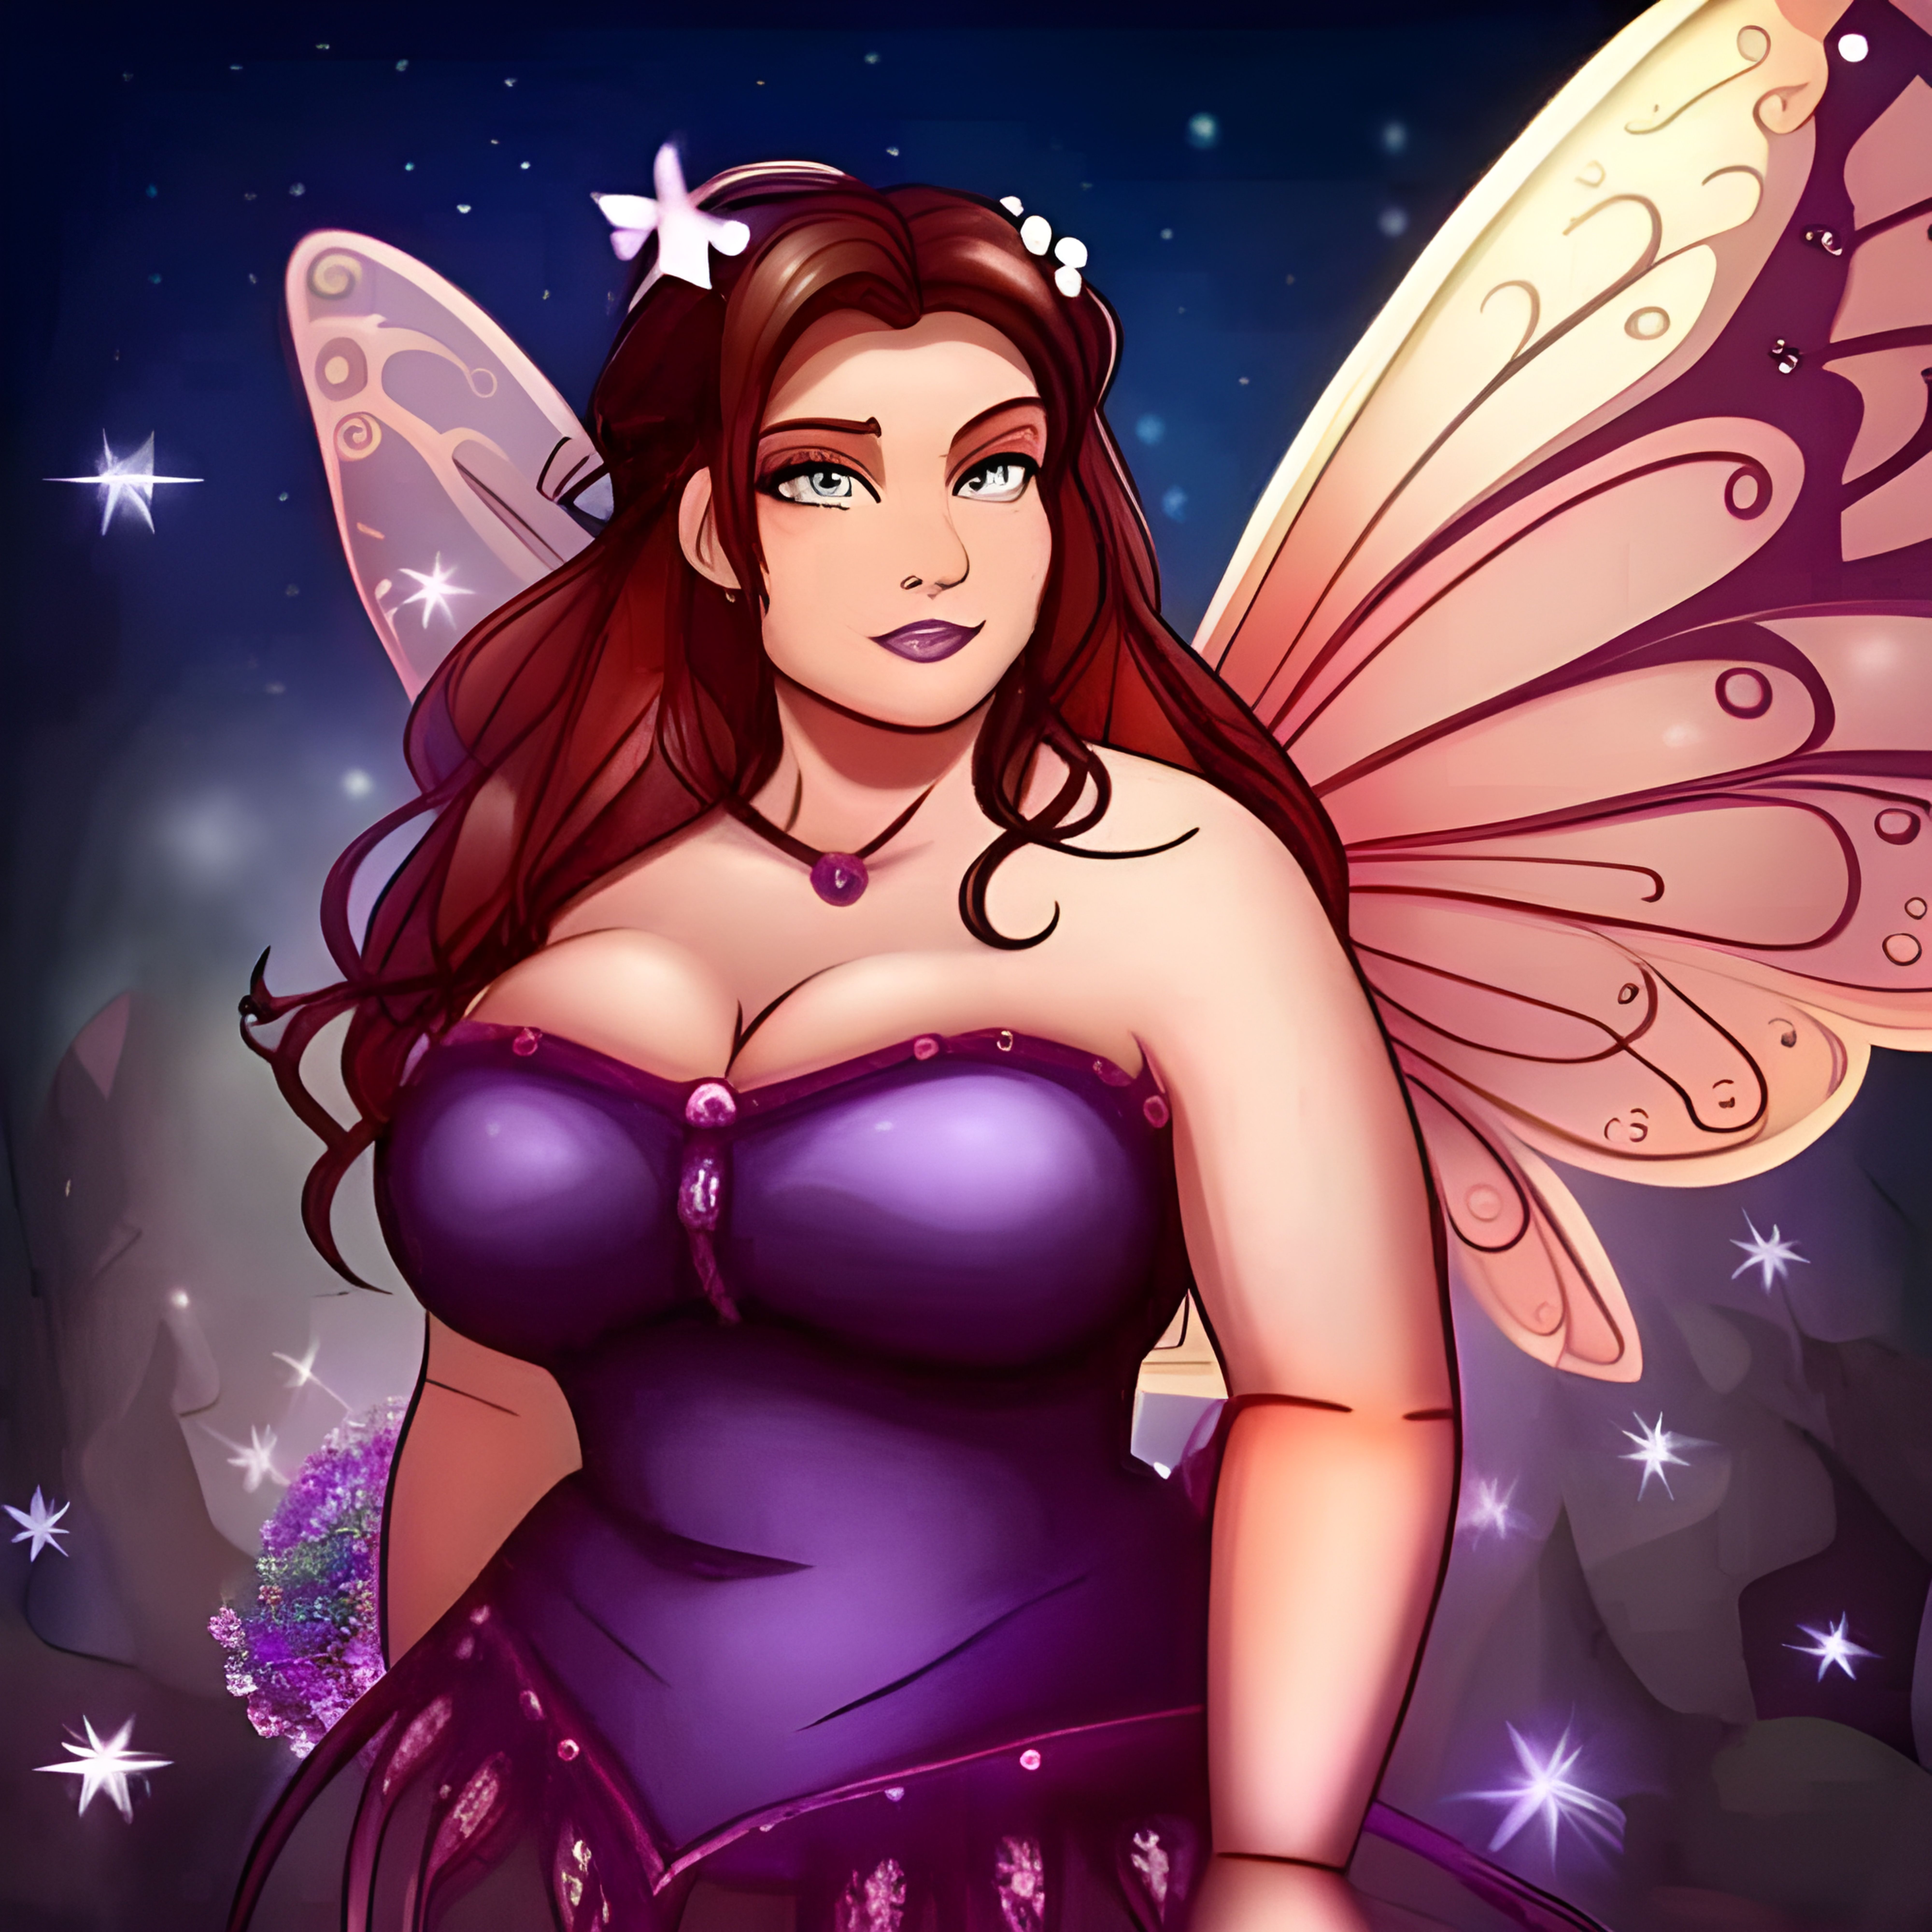 Dark Fairy - azaleasdolls.com